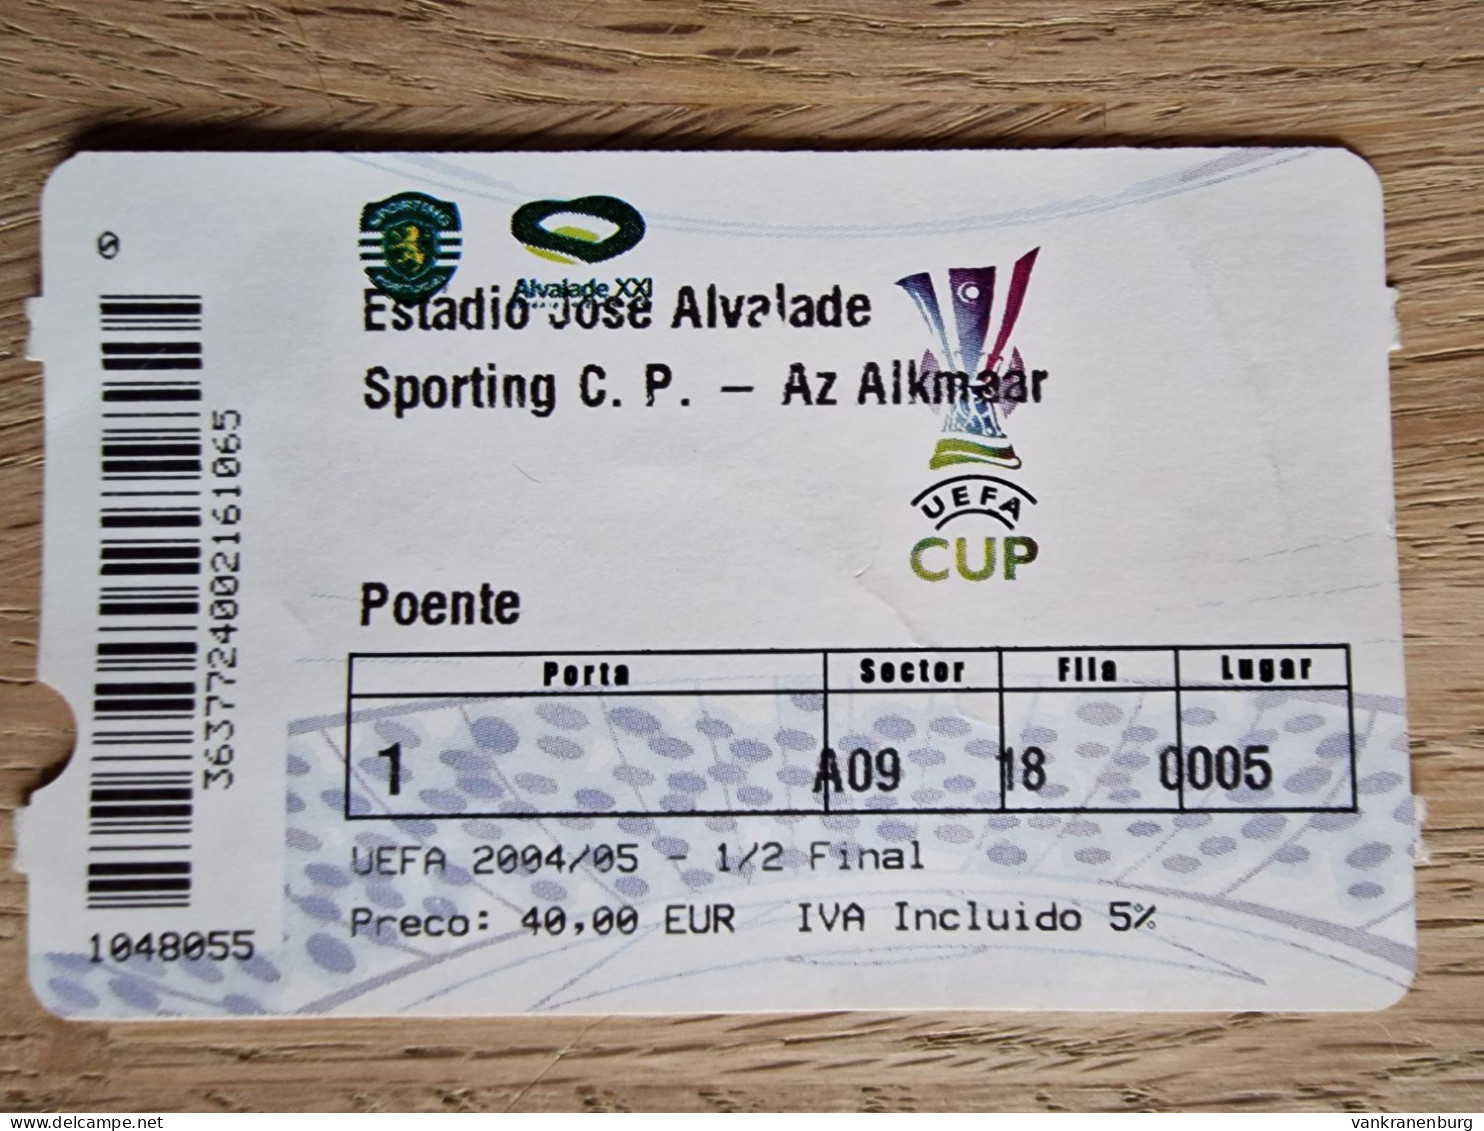 Ticket Sporting CP - AZ Alkmaar - 28.4.2005 - UEFA Cup - Football Soccer Fussball Calcio Semi Final - Tickets D'entrée